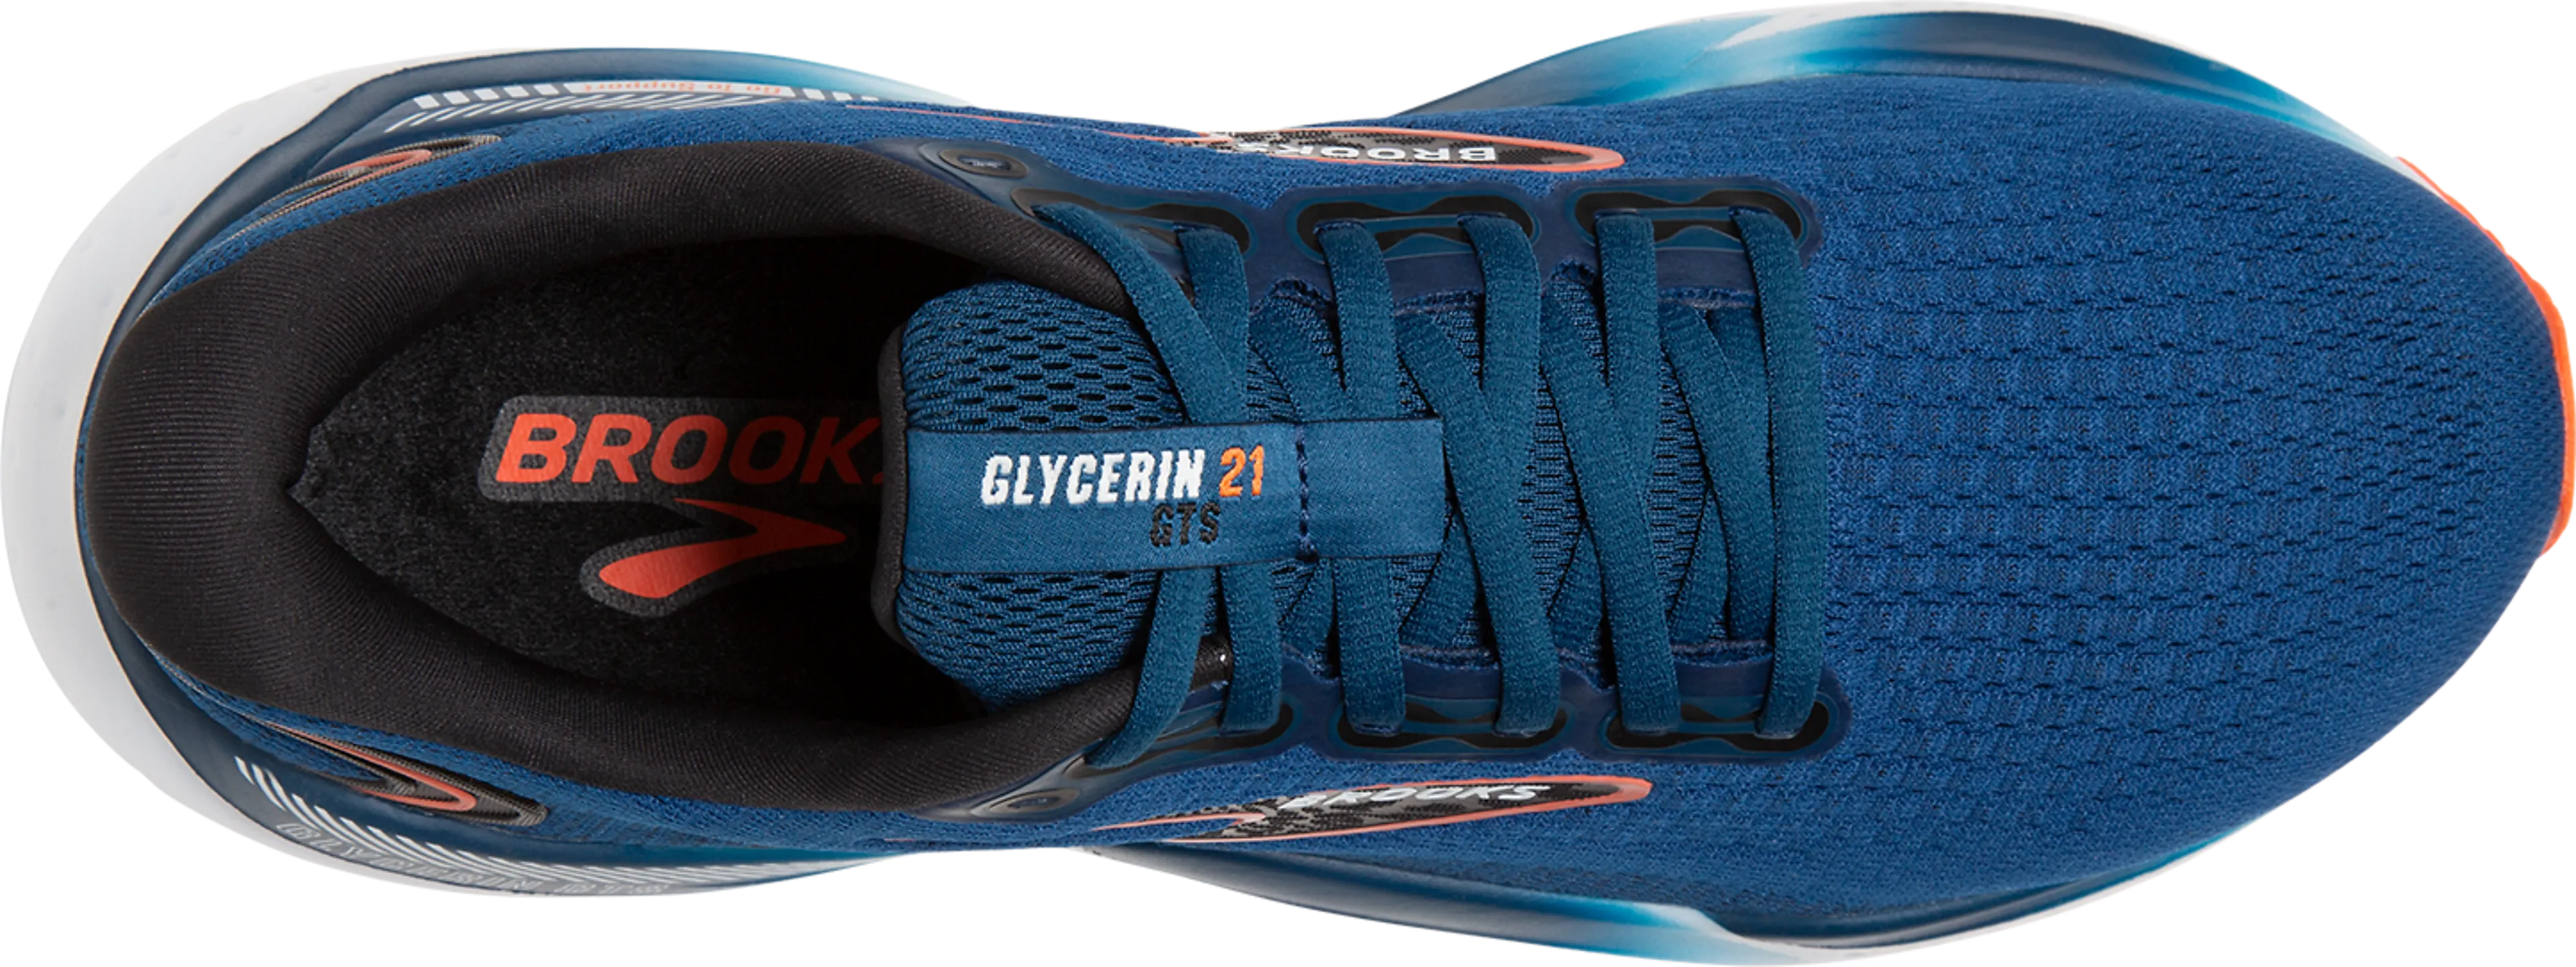 Glycerin GTS 21